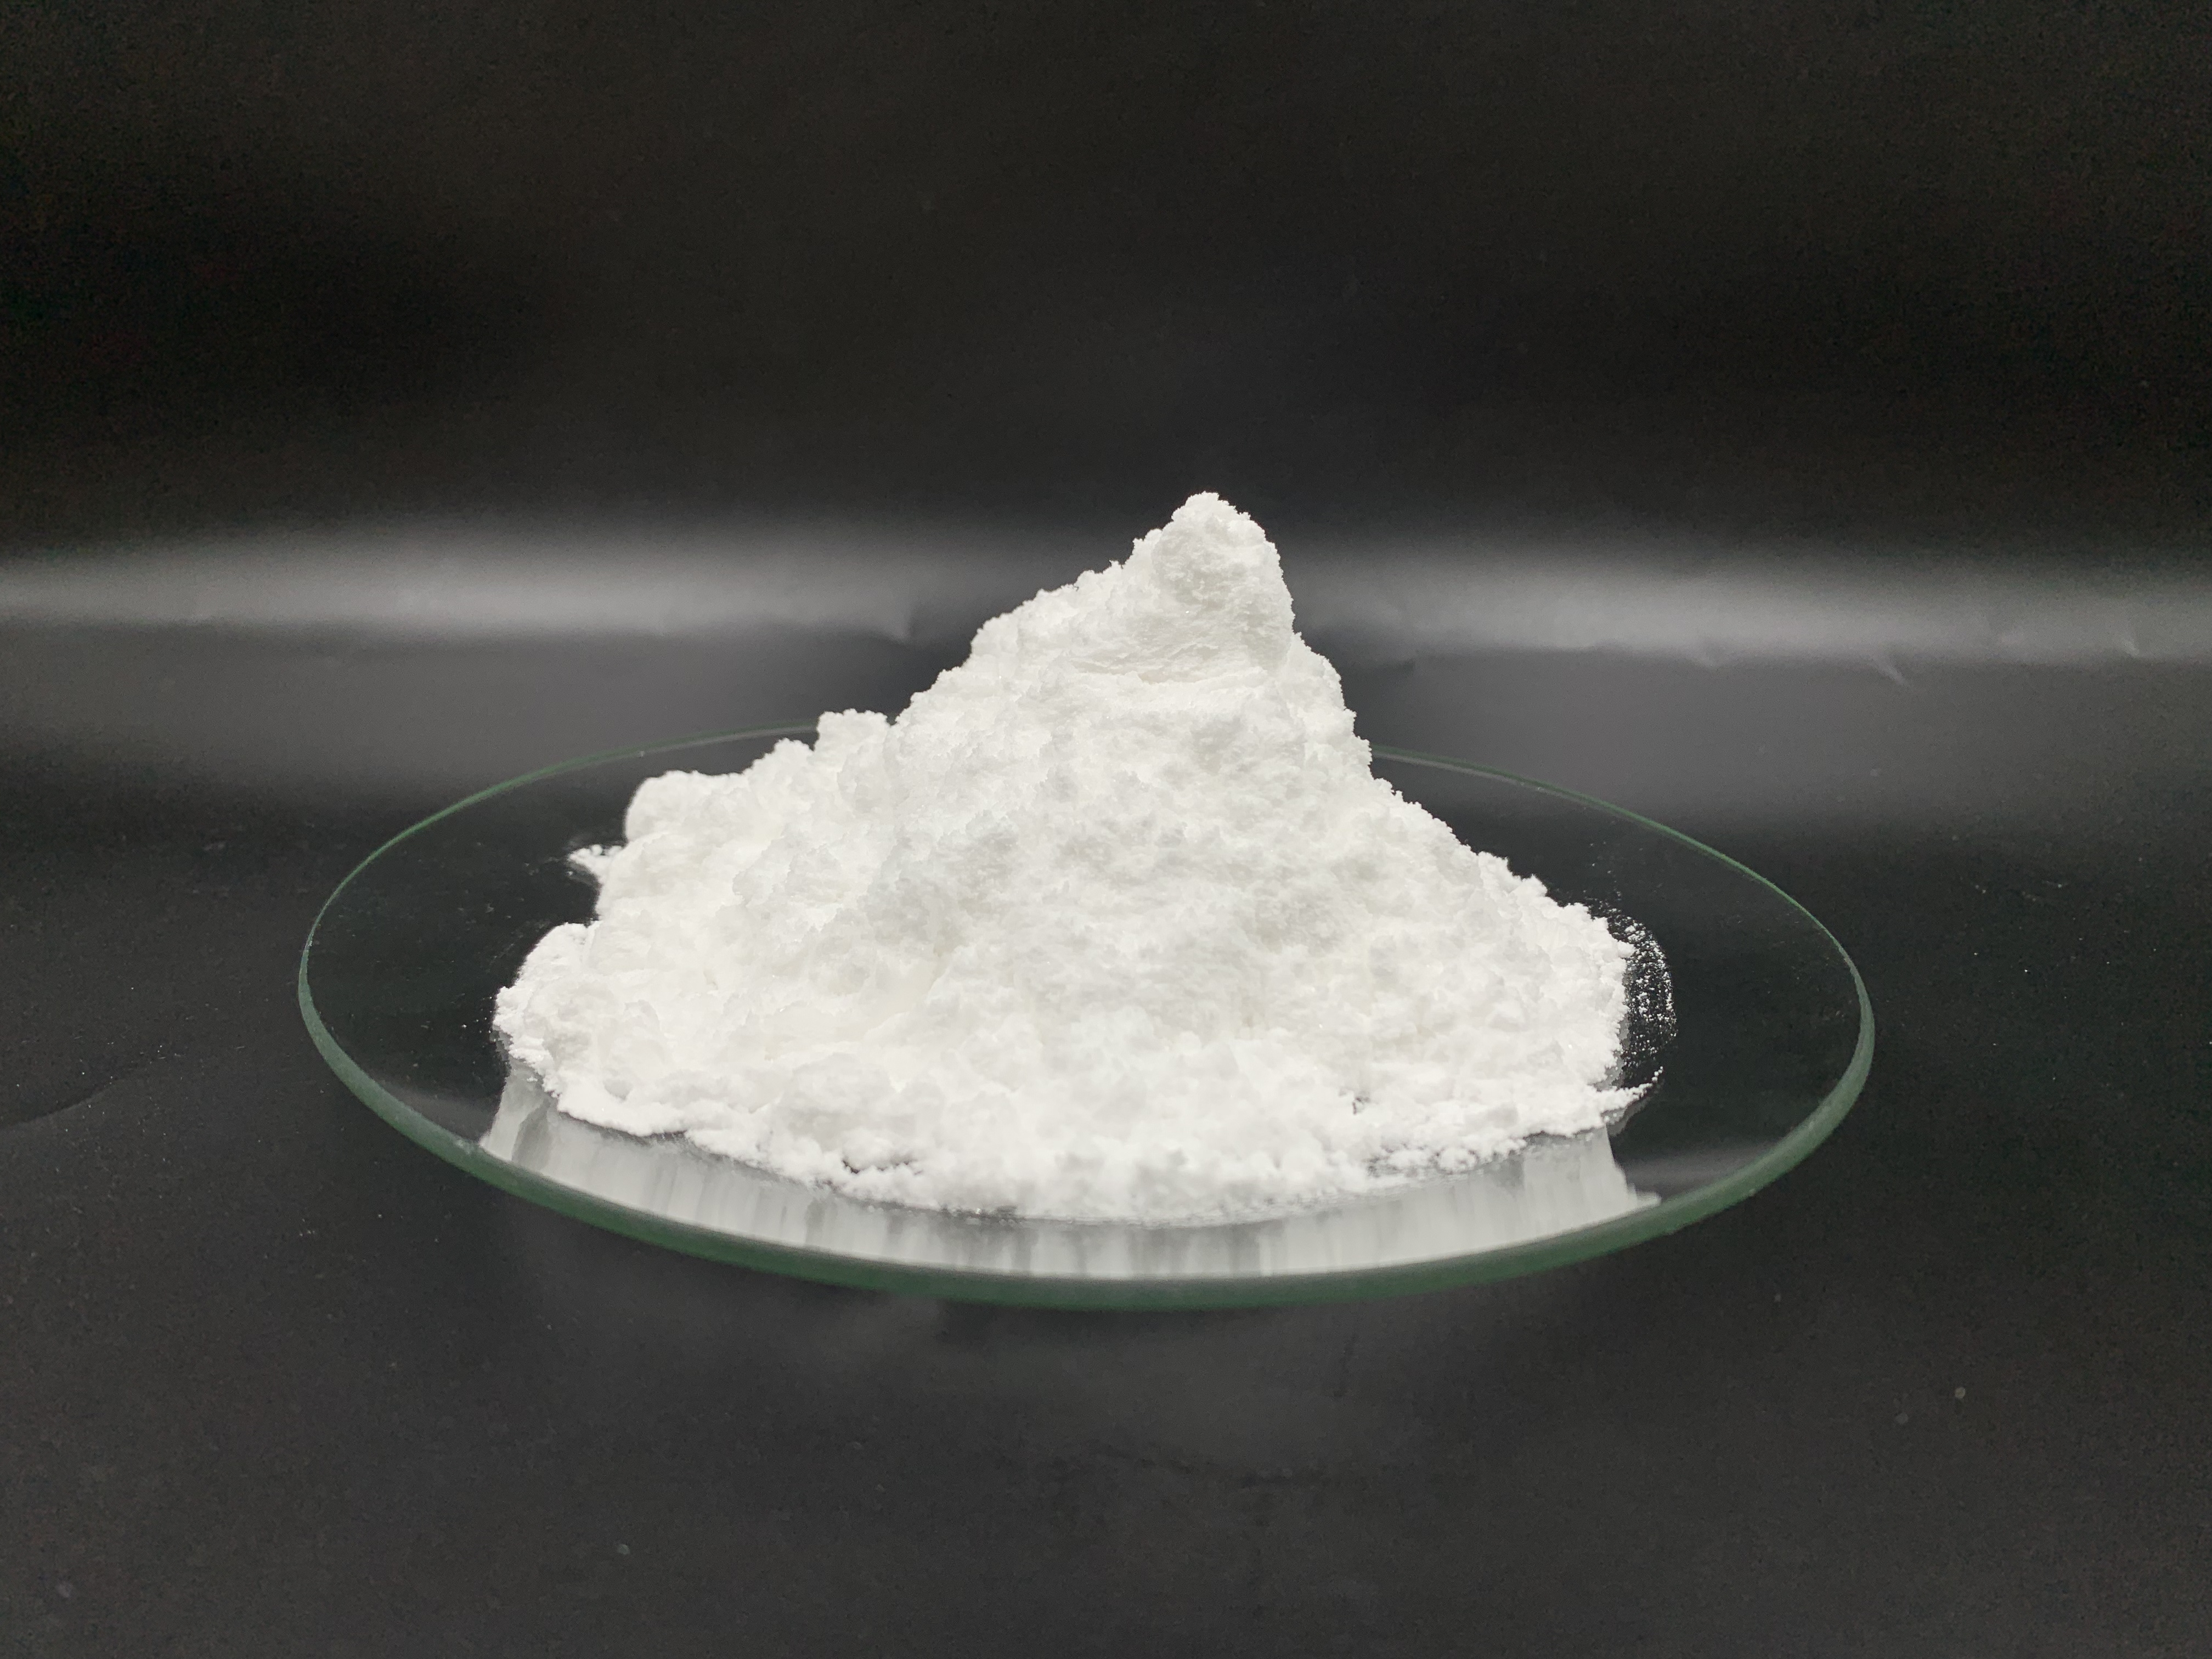 99% Pure Larocaine Dimethocaine Powder CAS 94-15-5 with Best Price